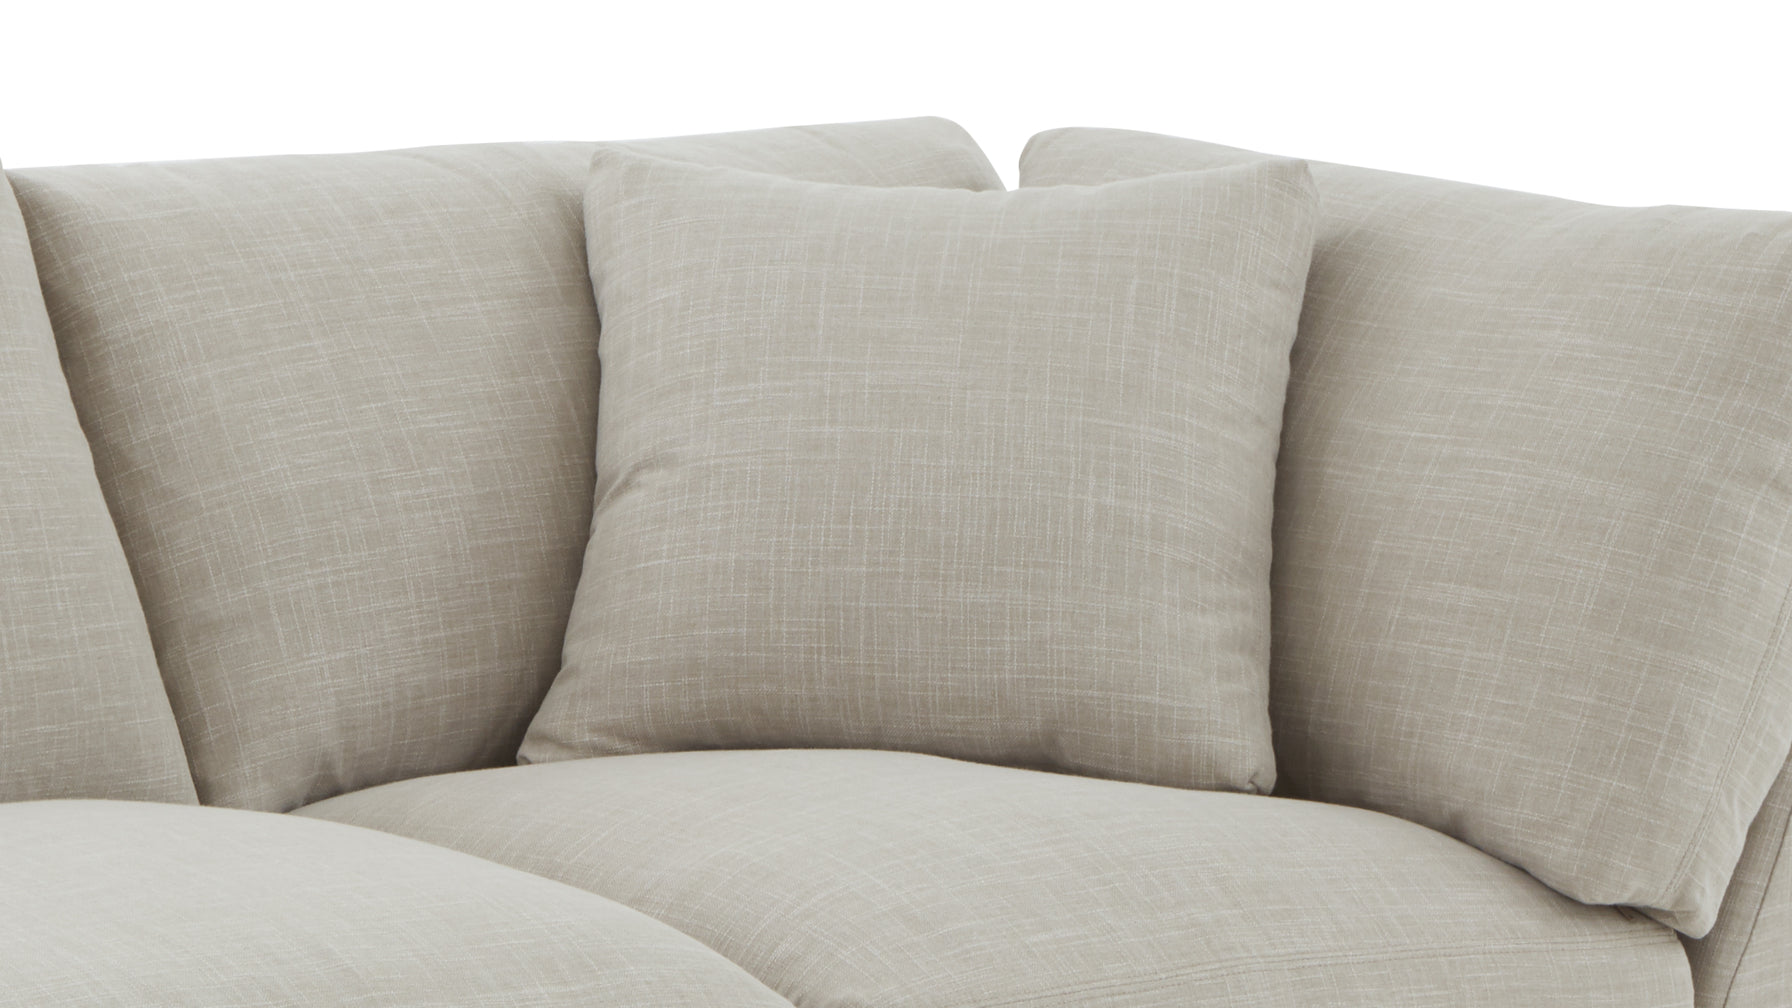 Get Together™ 2-Piece Modular Sofa, Standard, Light Pebble - Image 9